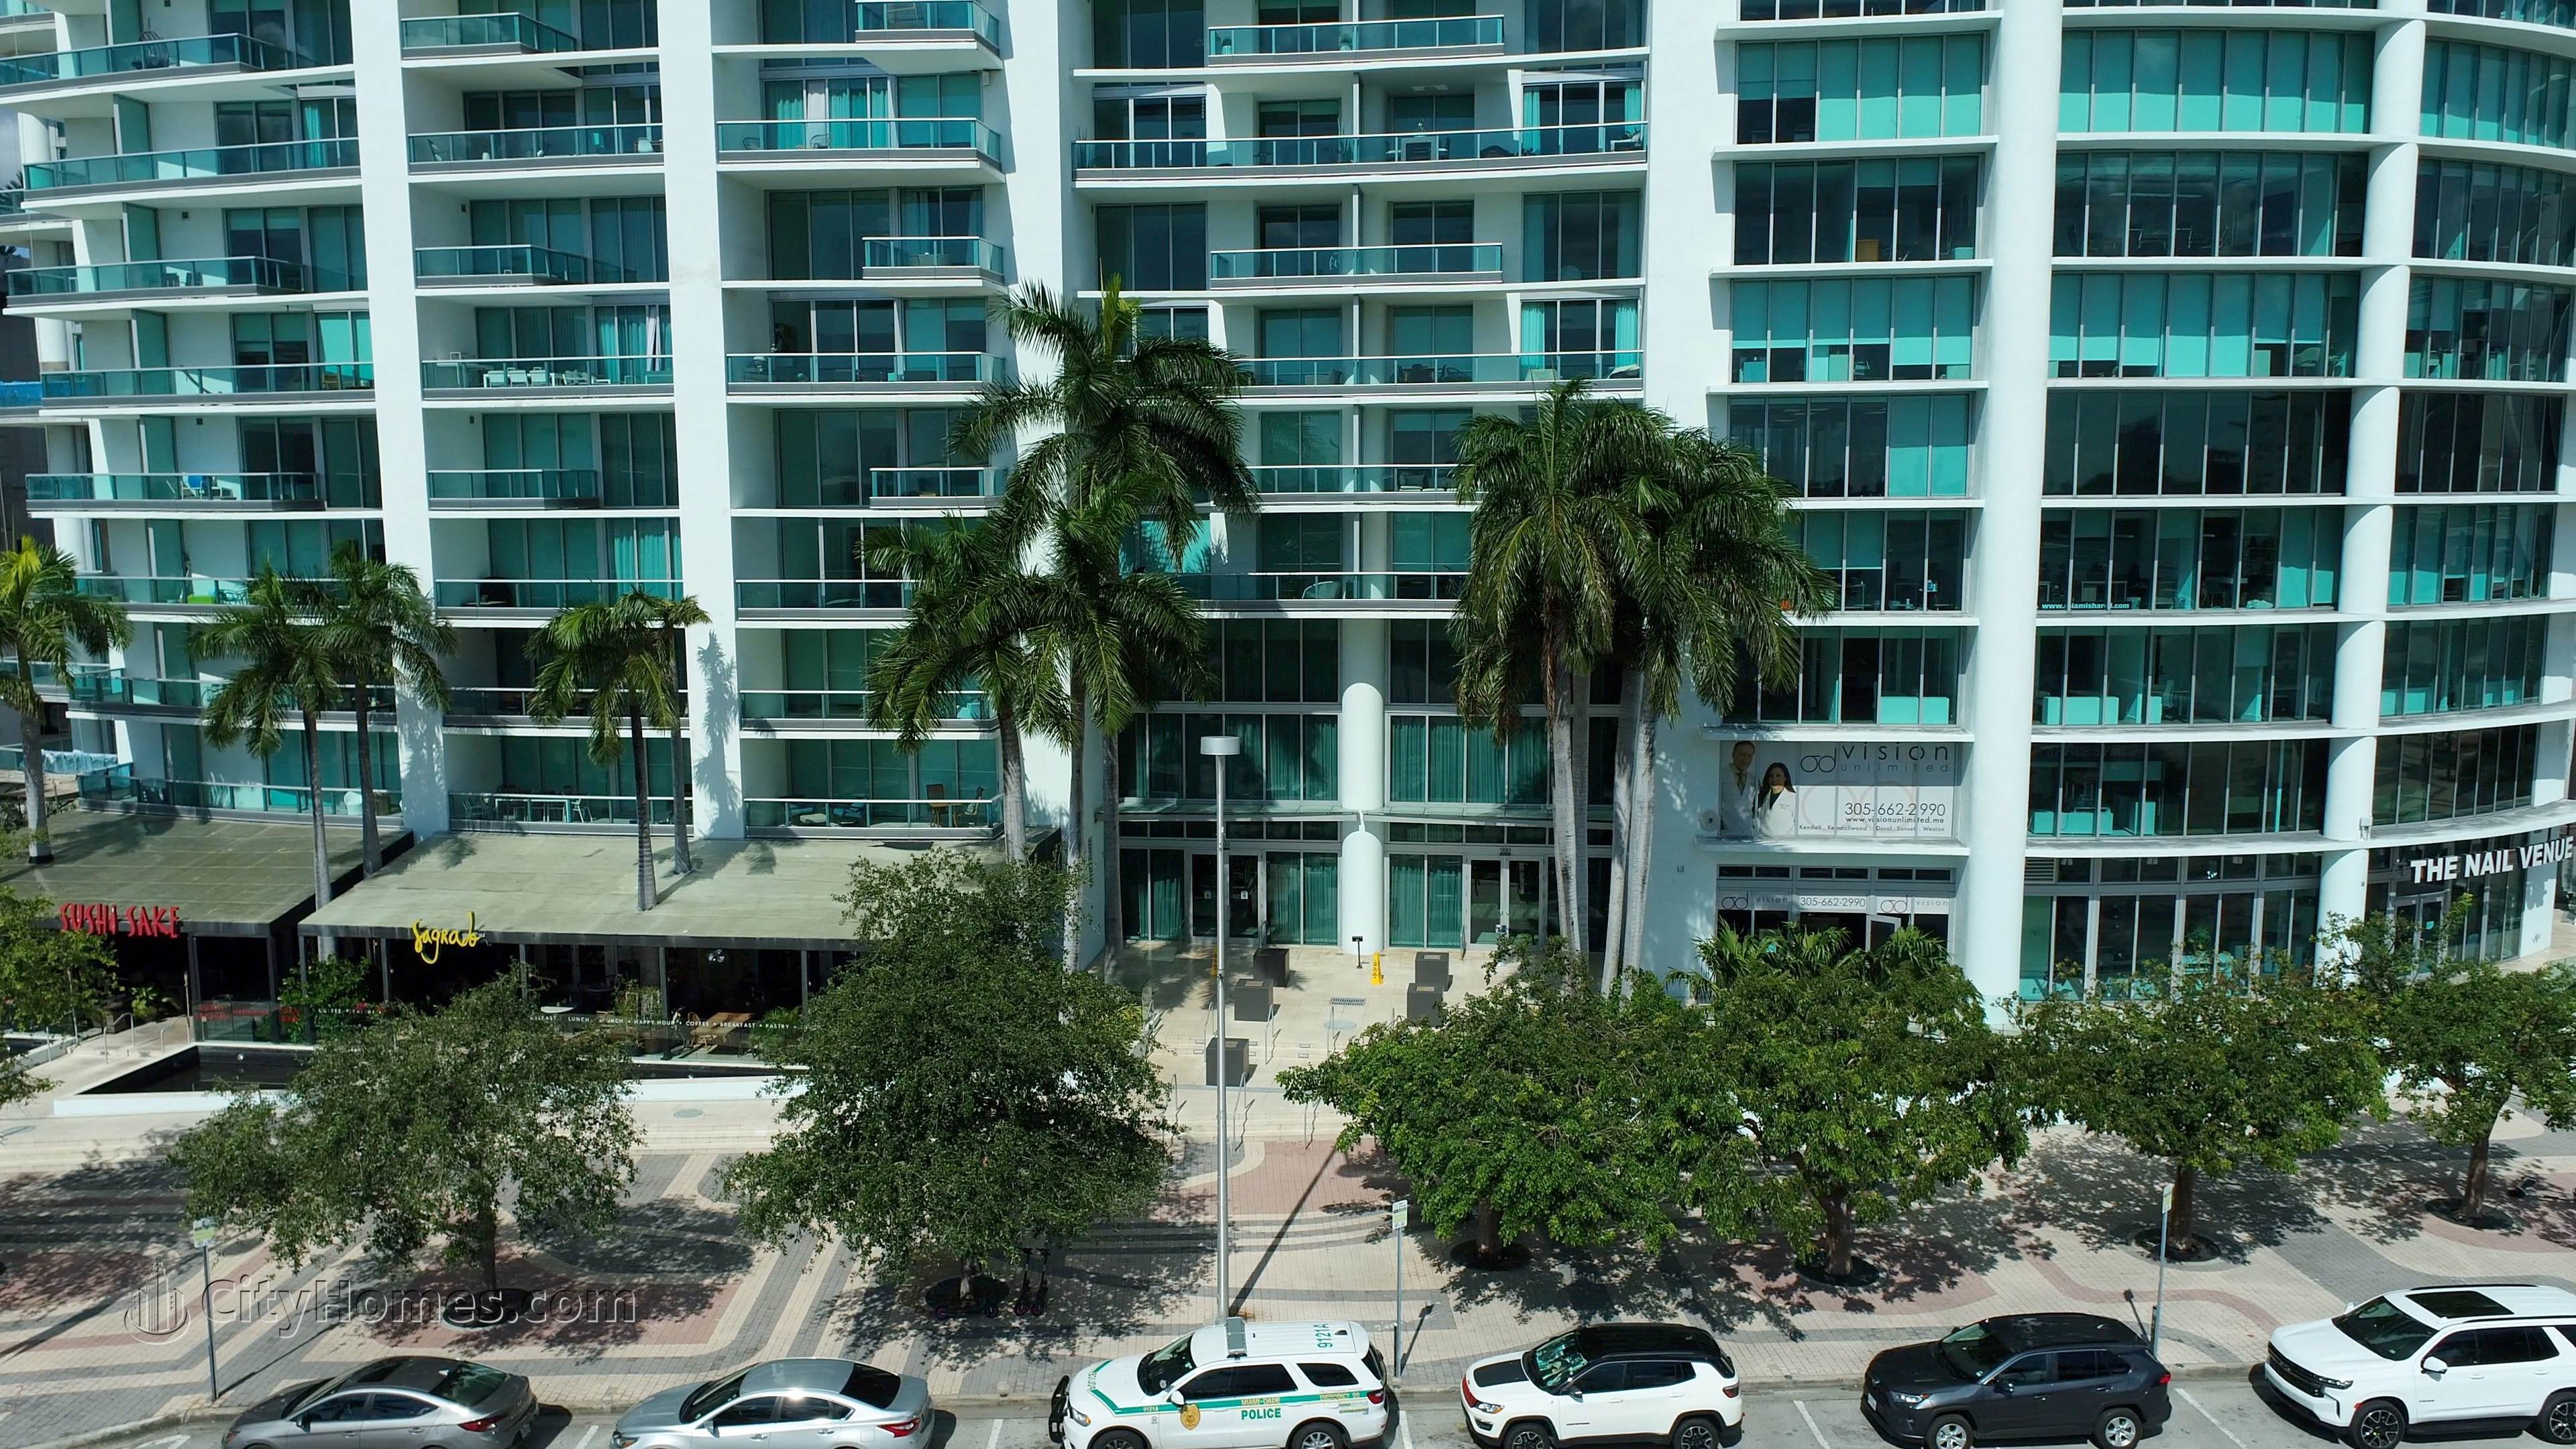 6. 900 Biscayne Bay byggnad vid 900 Biscayne Boulevard, Miami, FL 33132